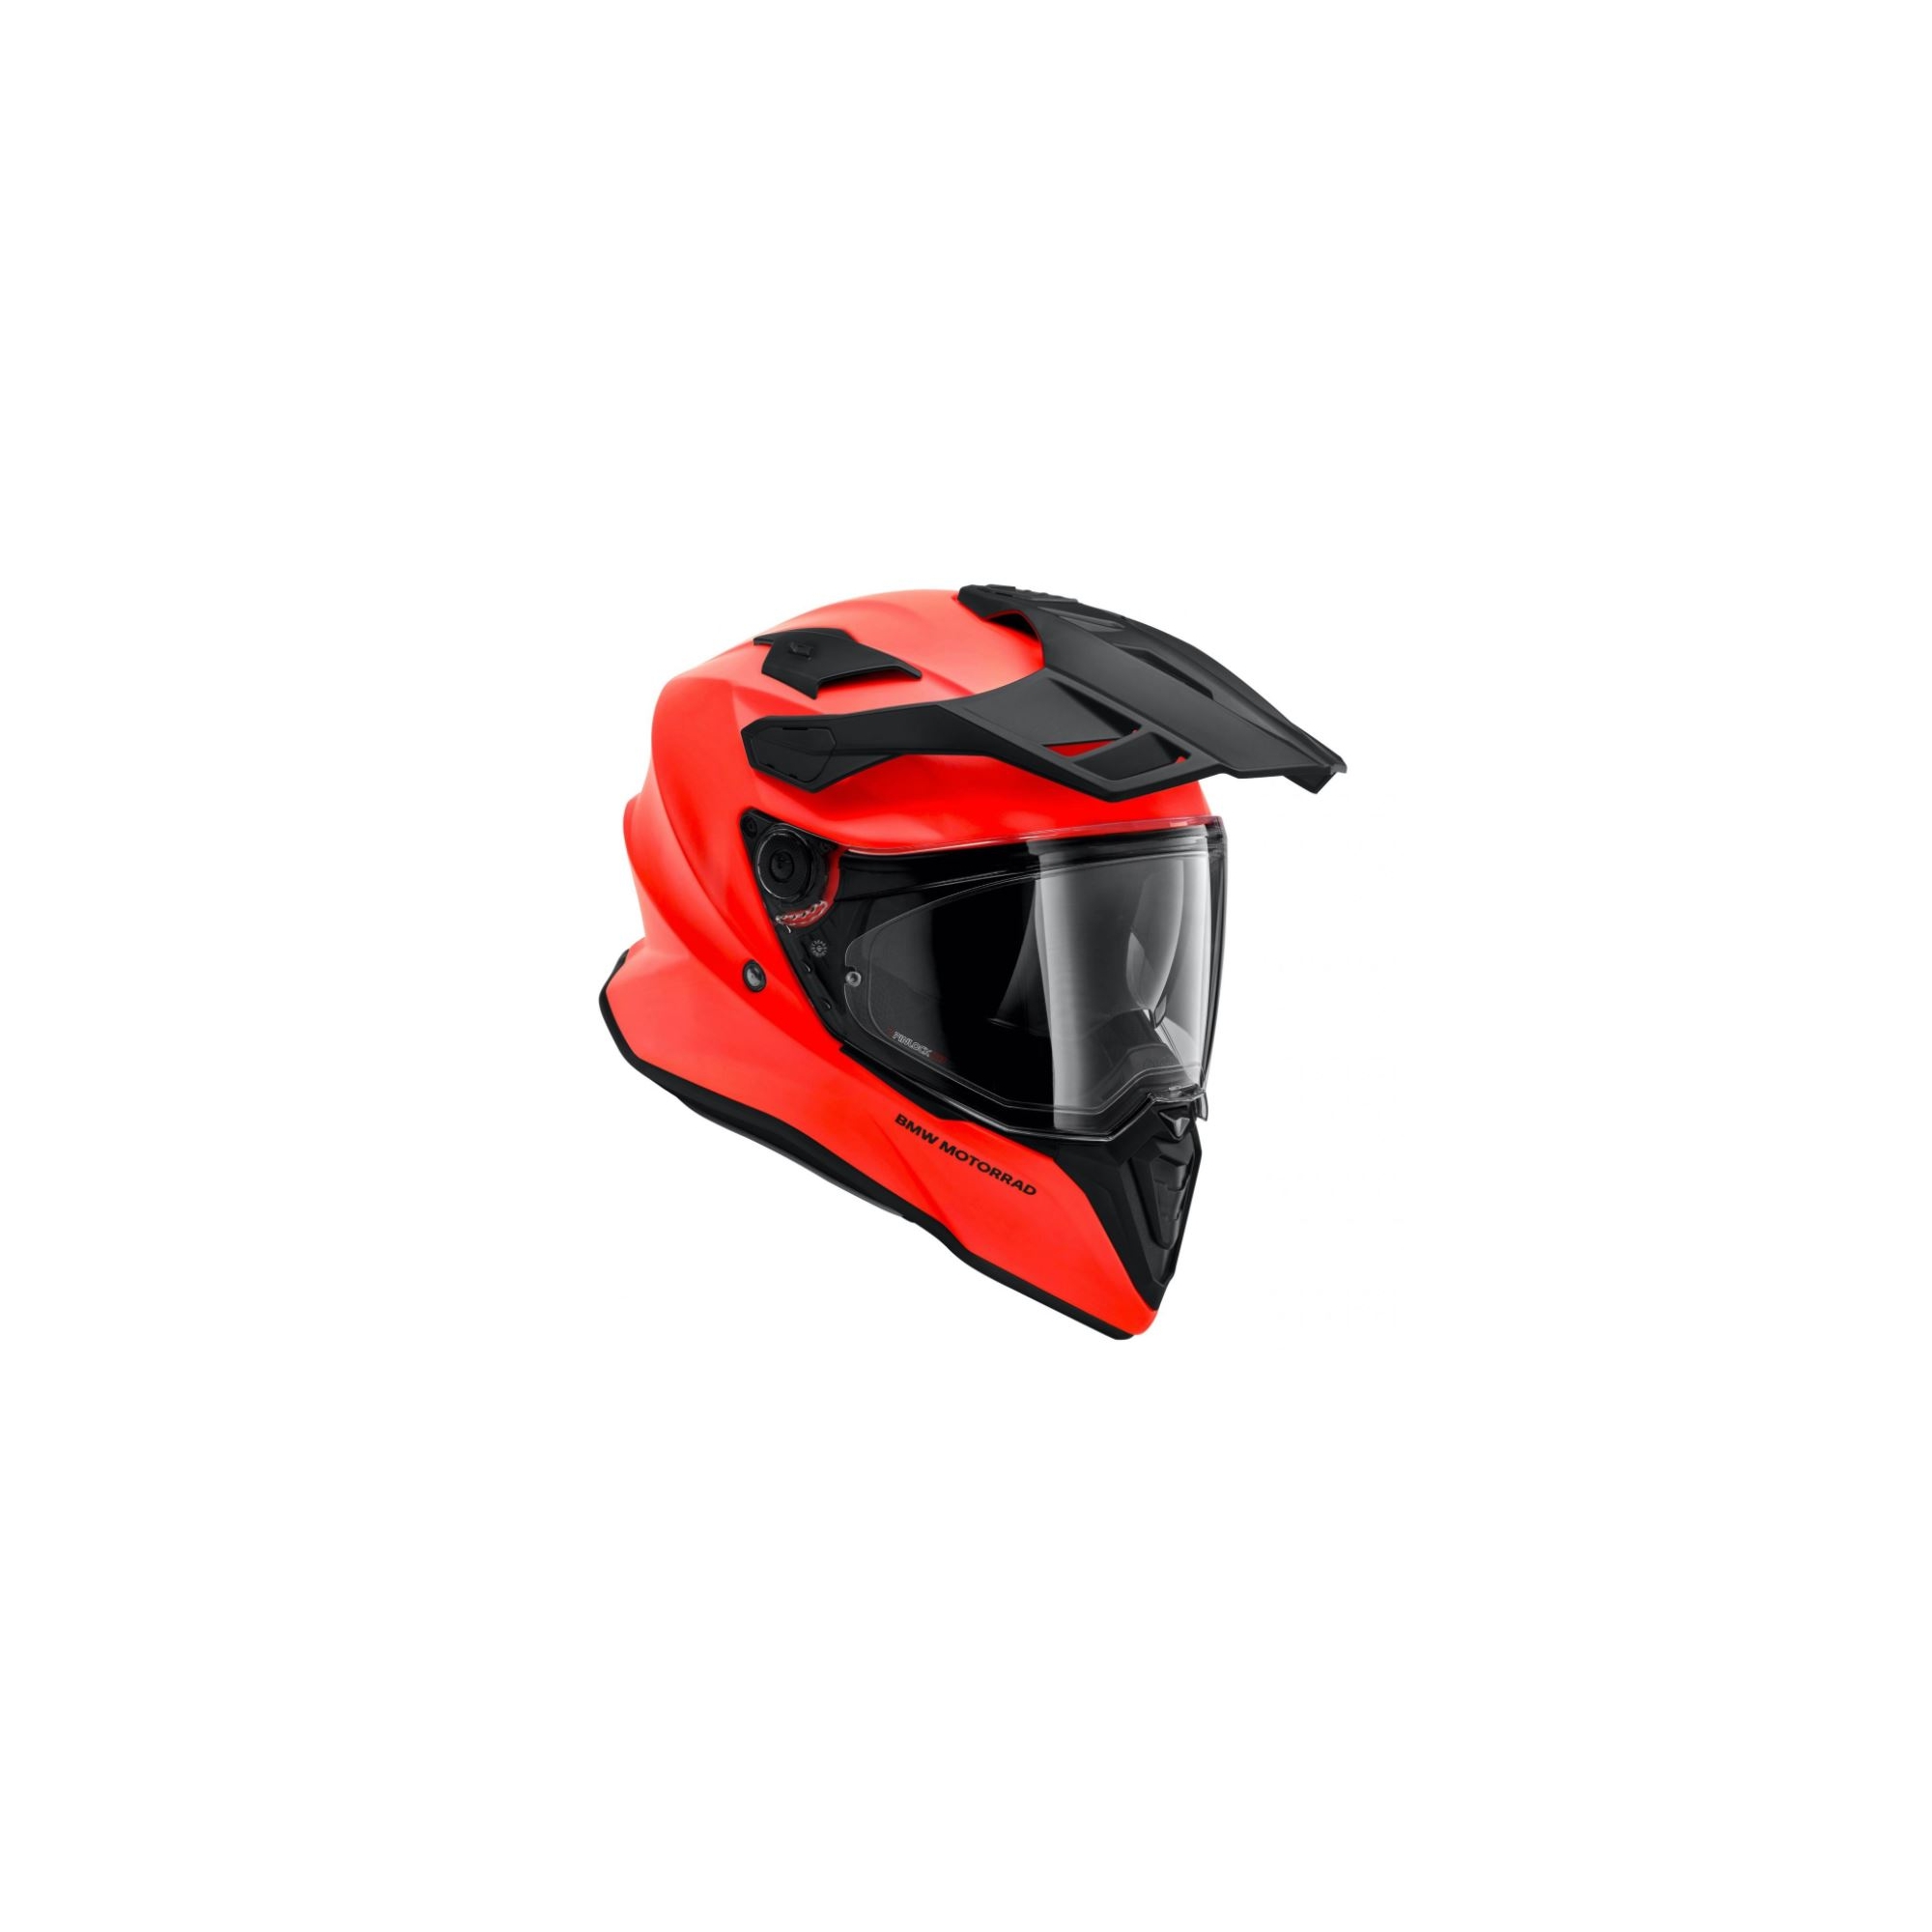 GS Pure helmet NeonOrange